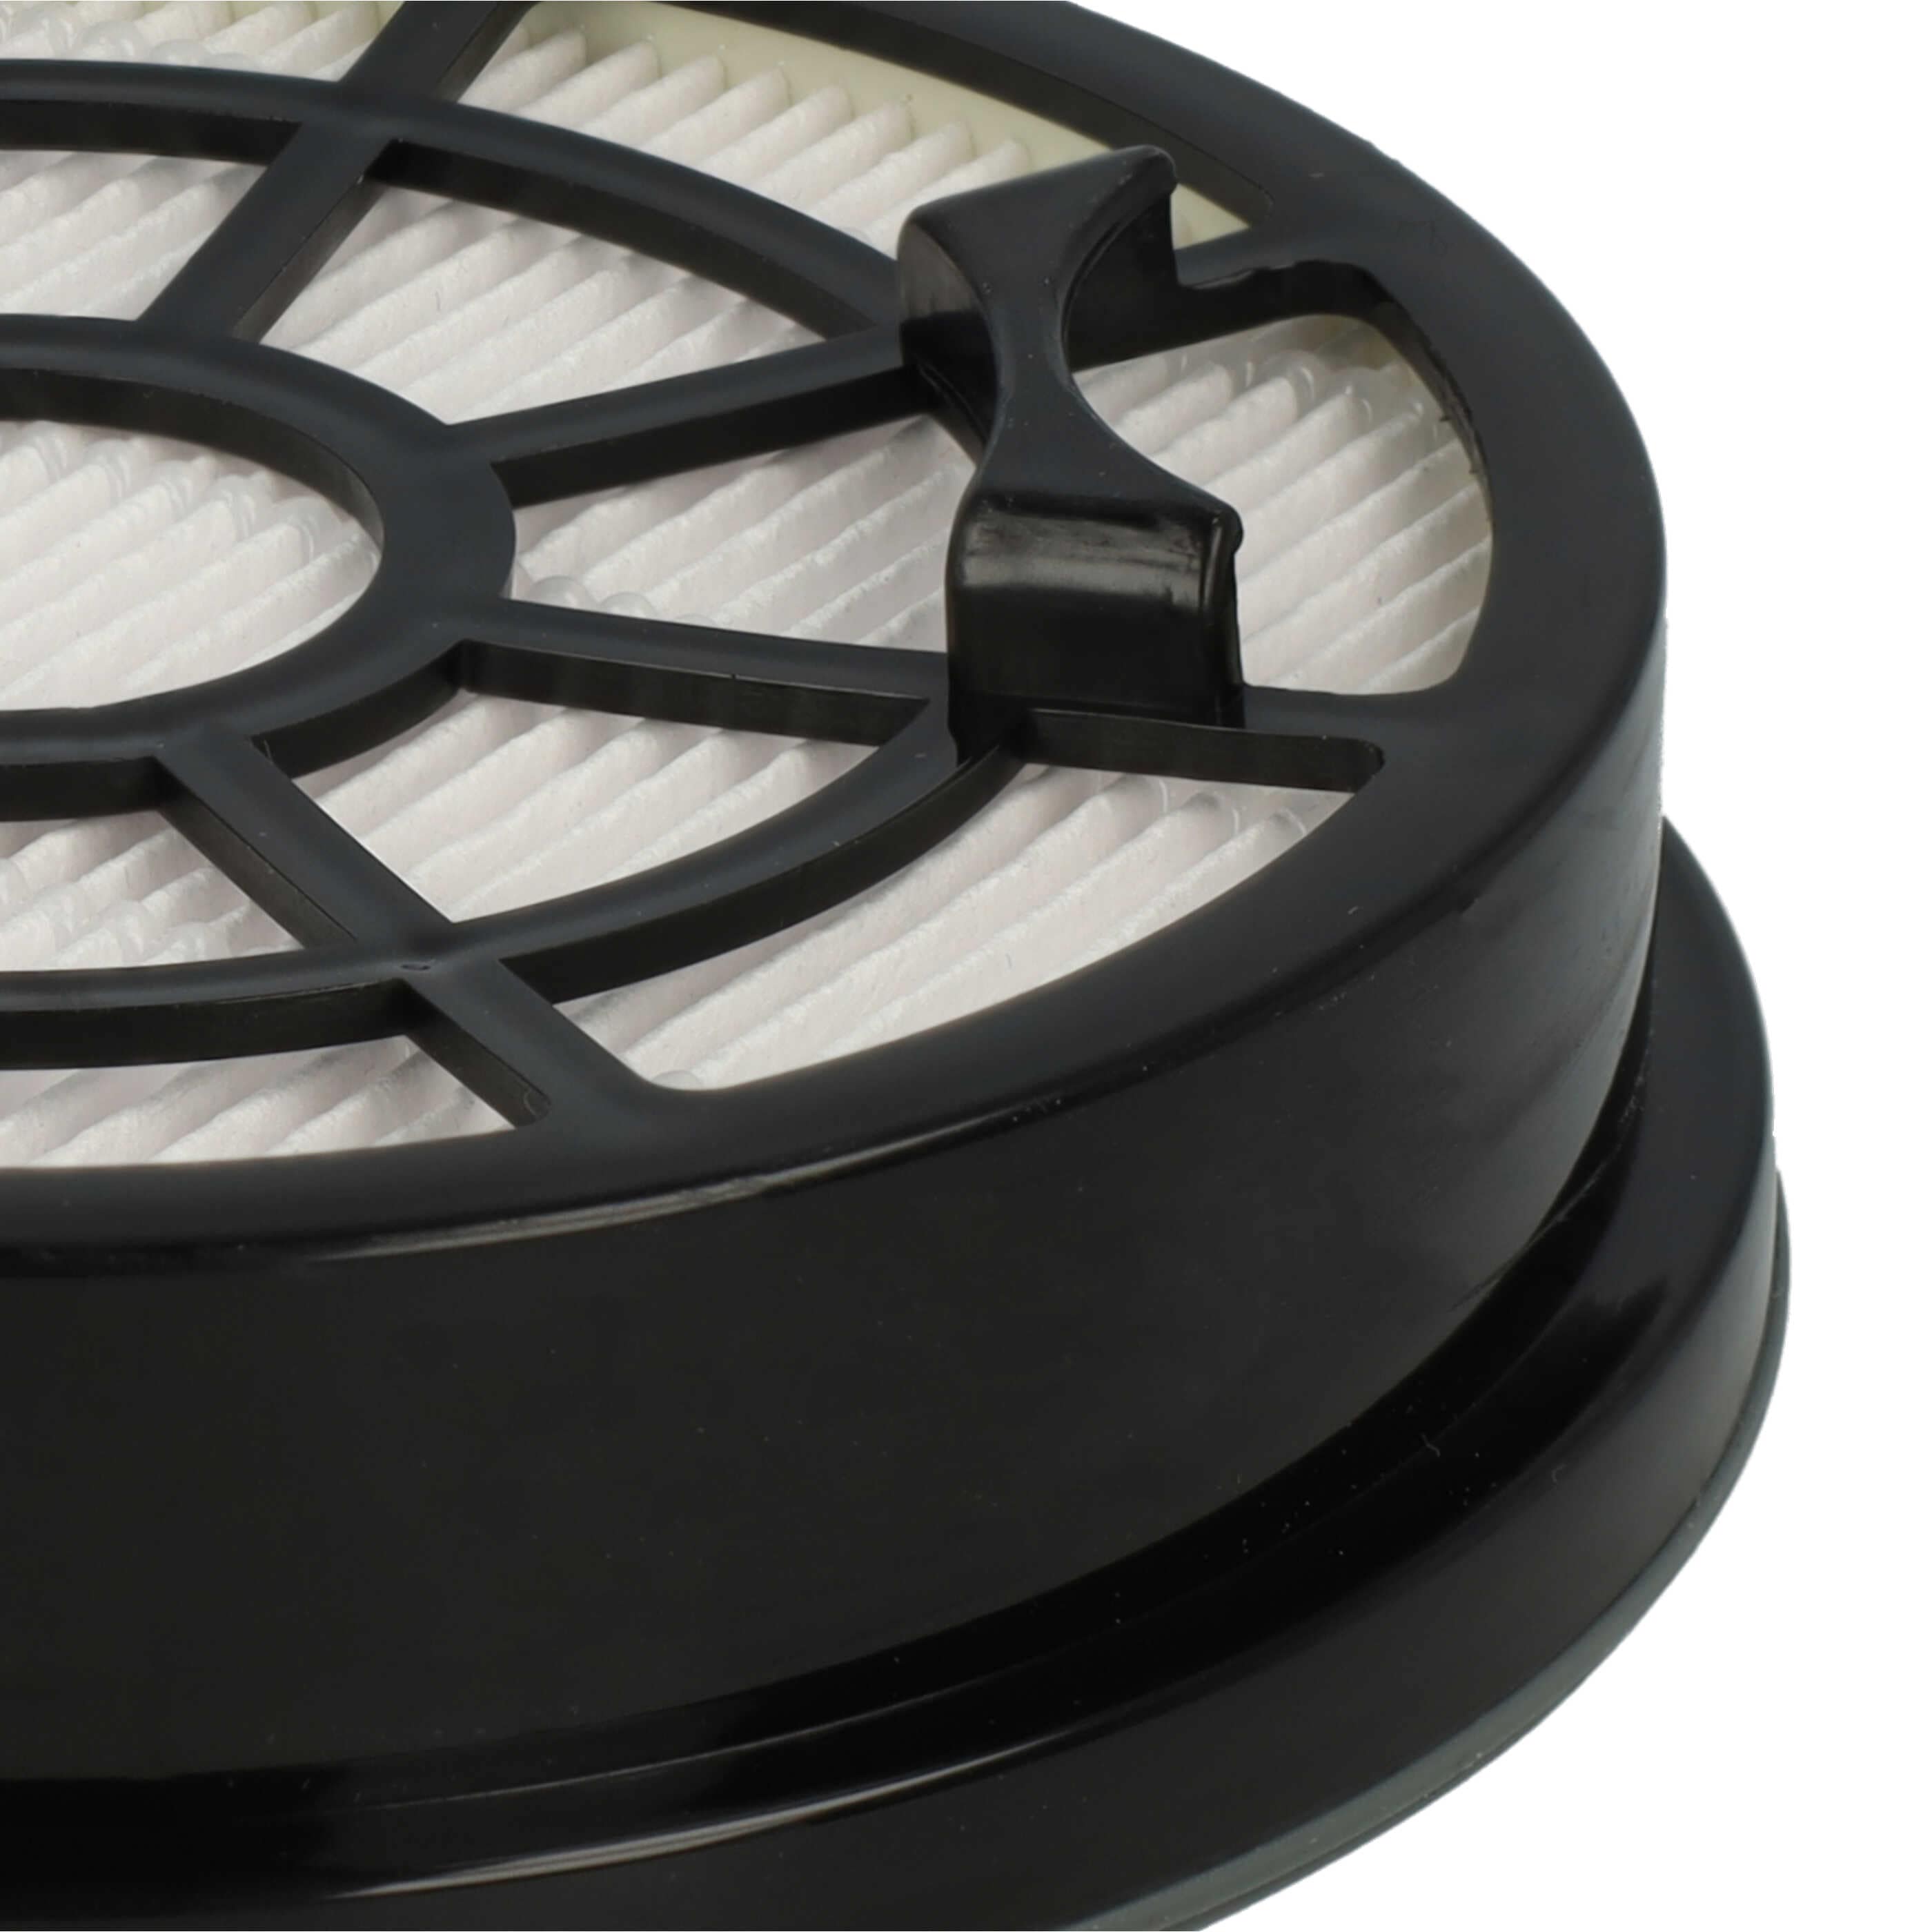 2x HEPA filter replaces Rowenta ZR904301 for Rowenta Vacuum Cleaner